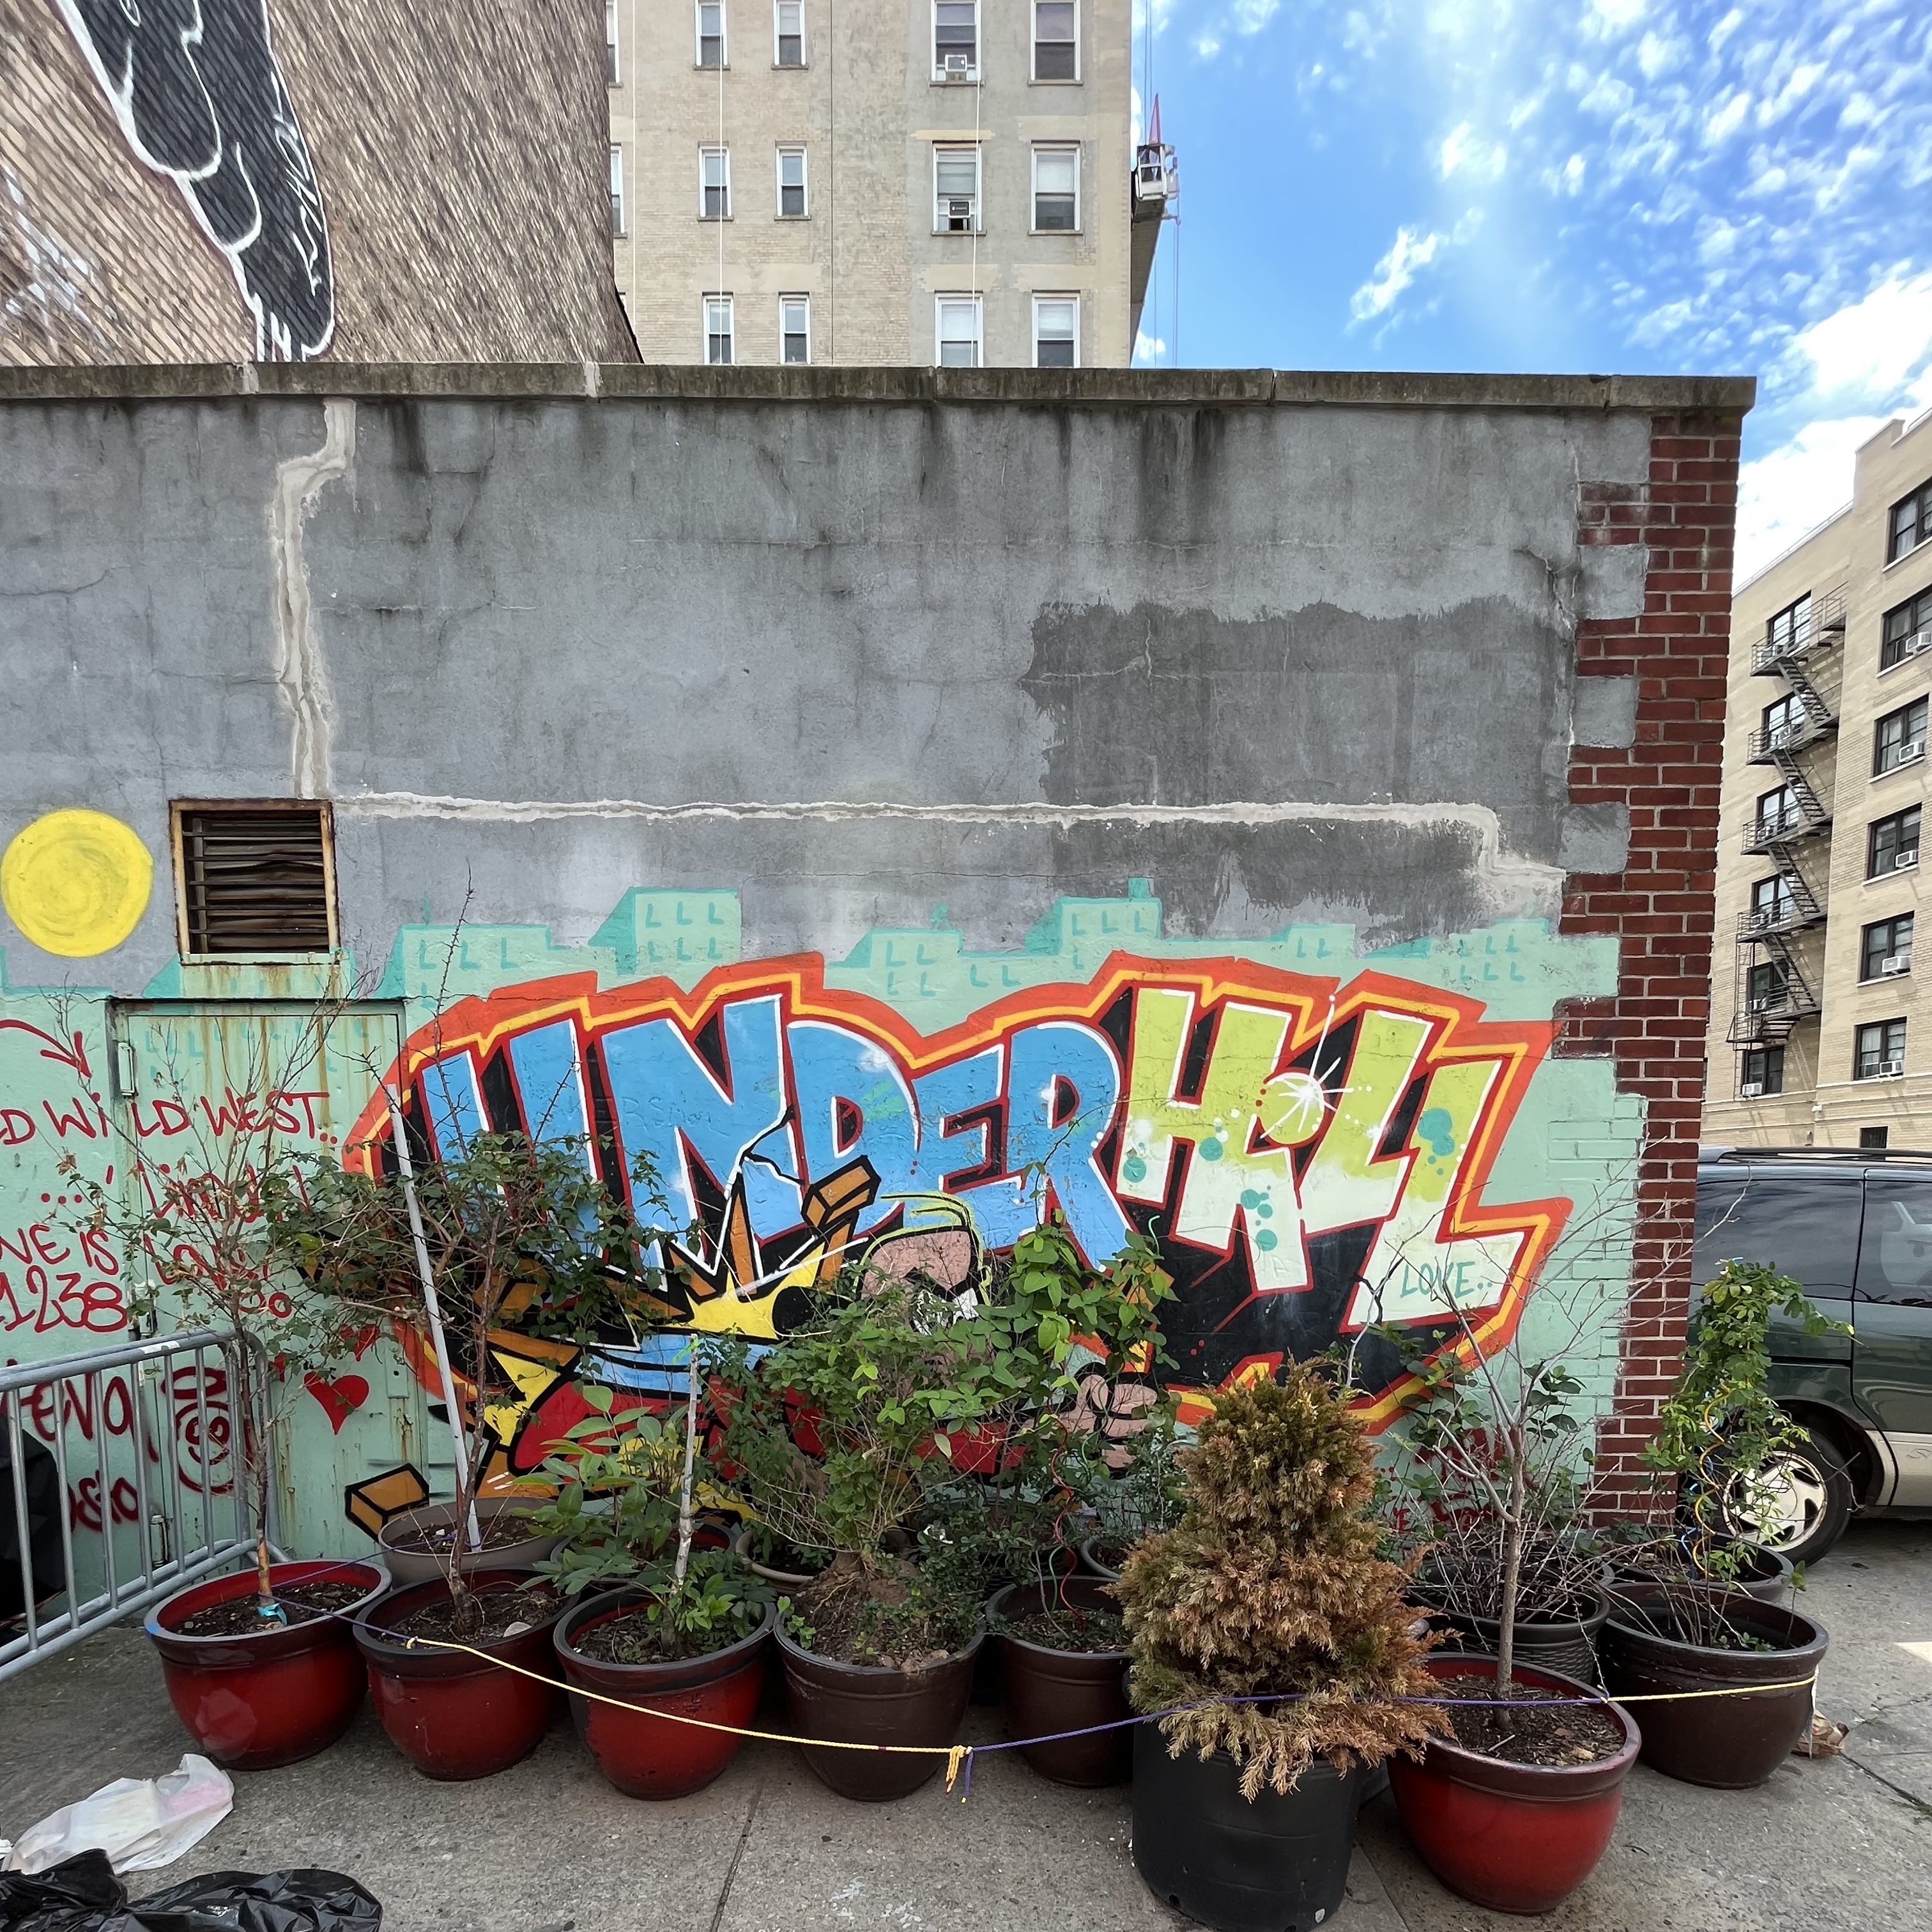 Street art on Underhill Avenue obscured by plants. Prospect Heights, Brooklyn